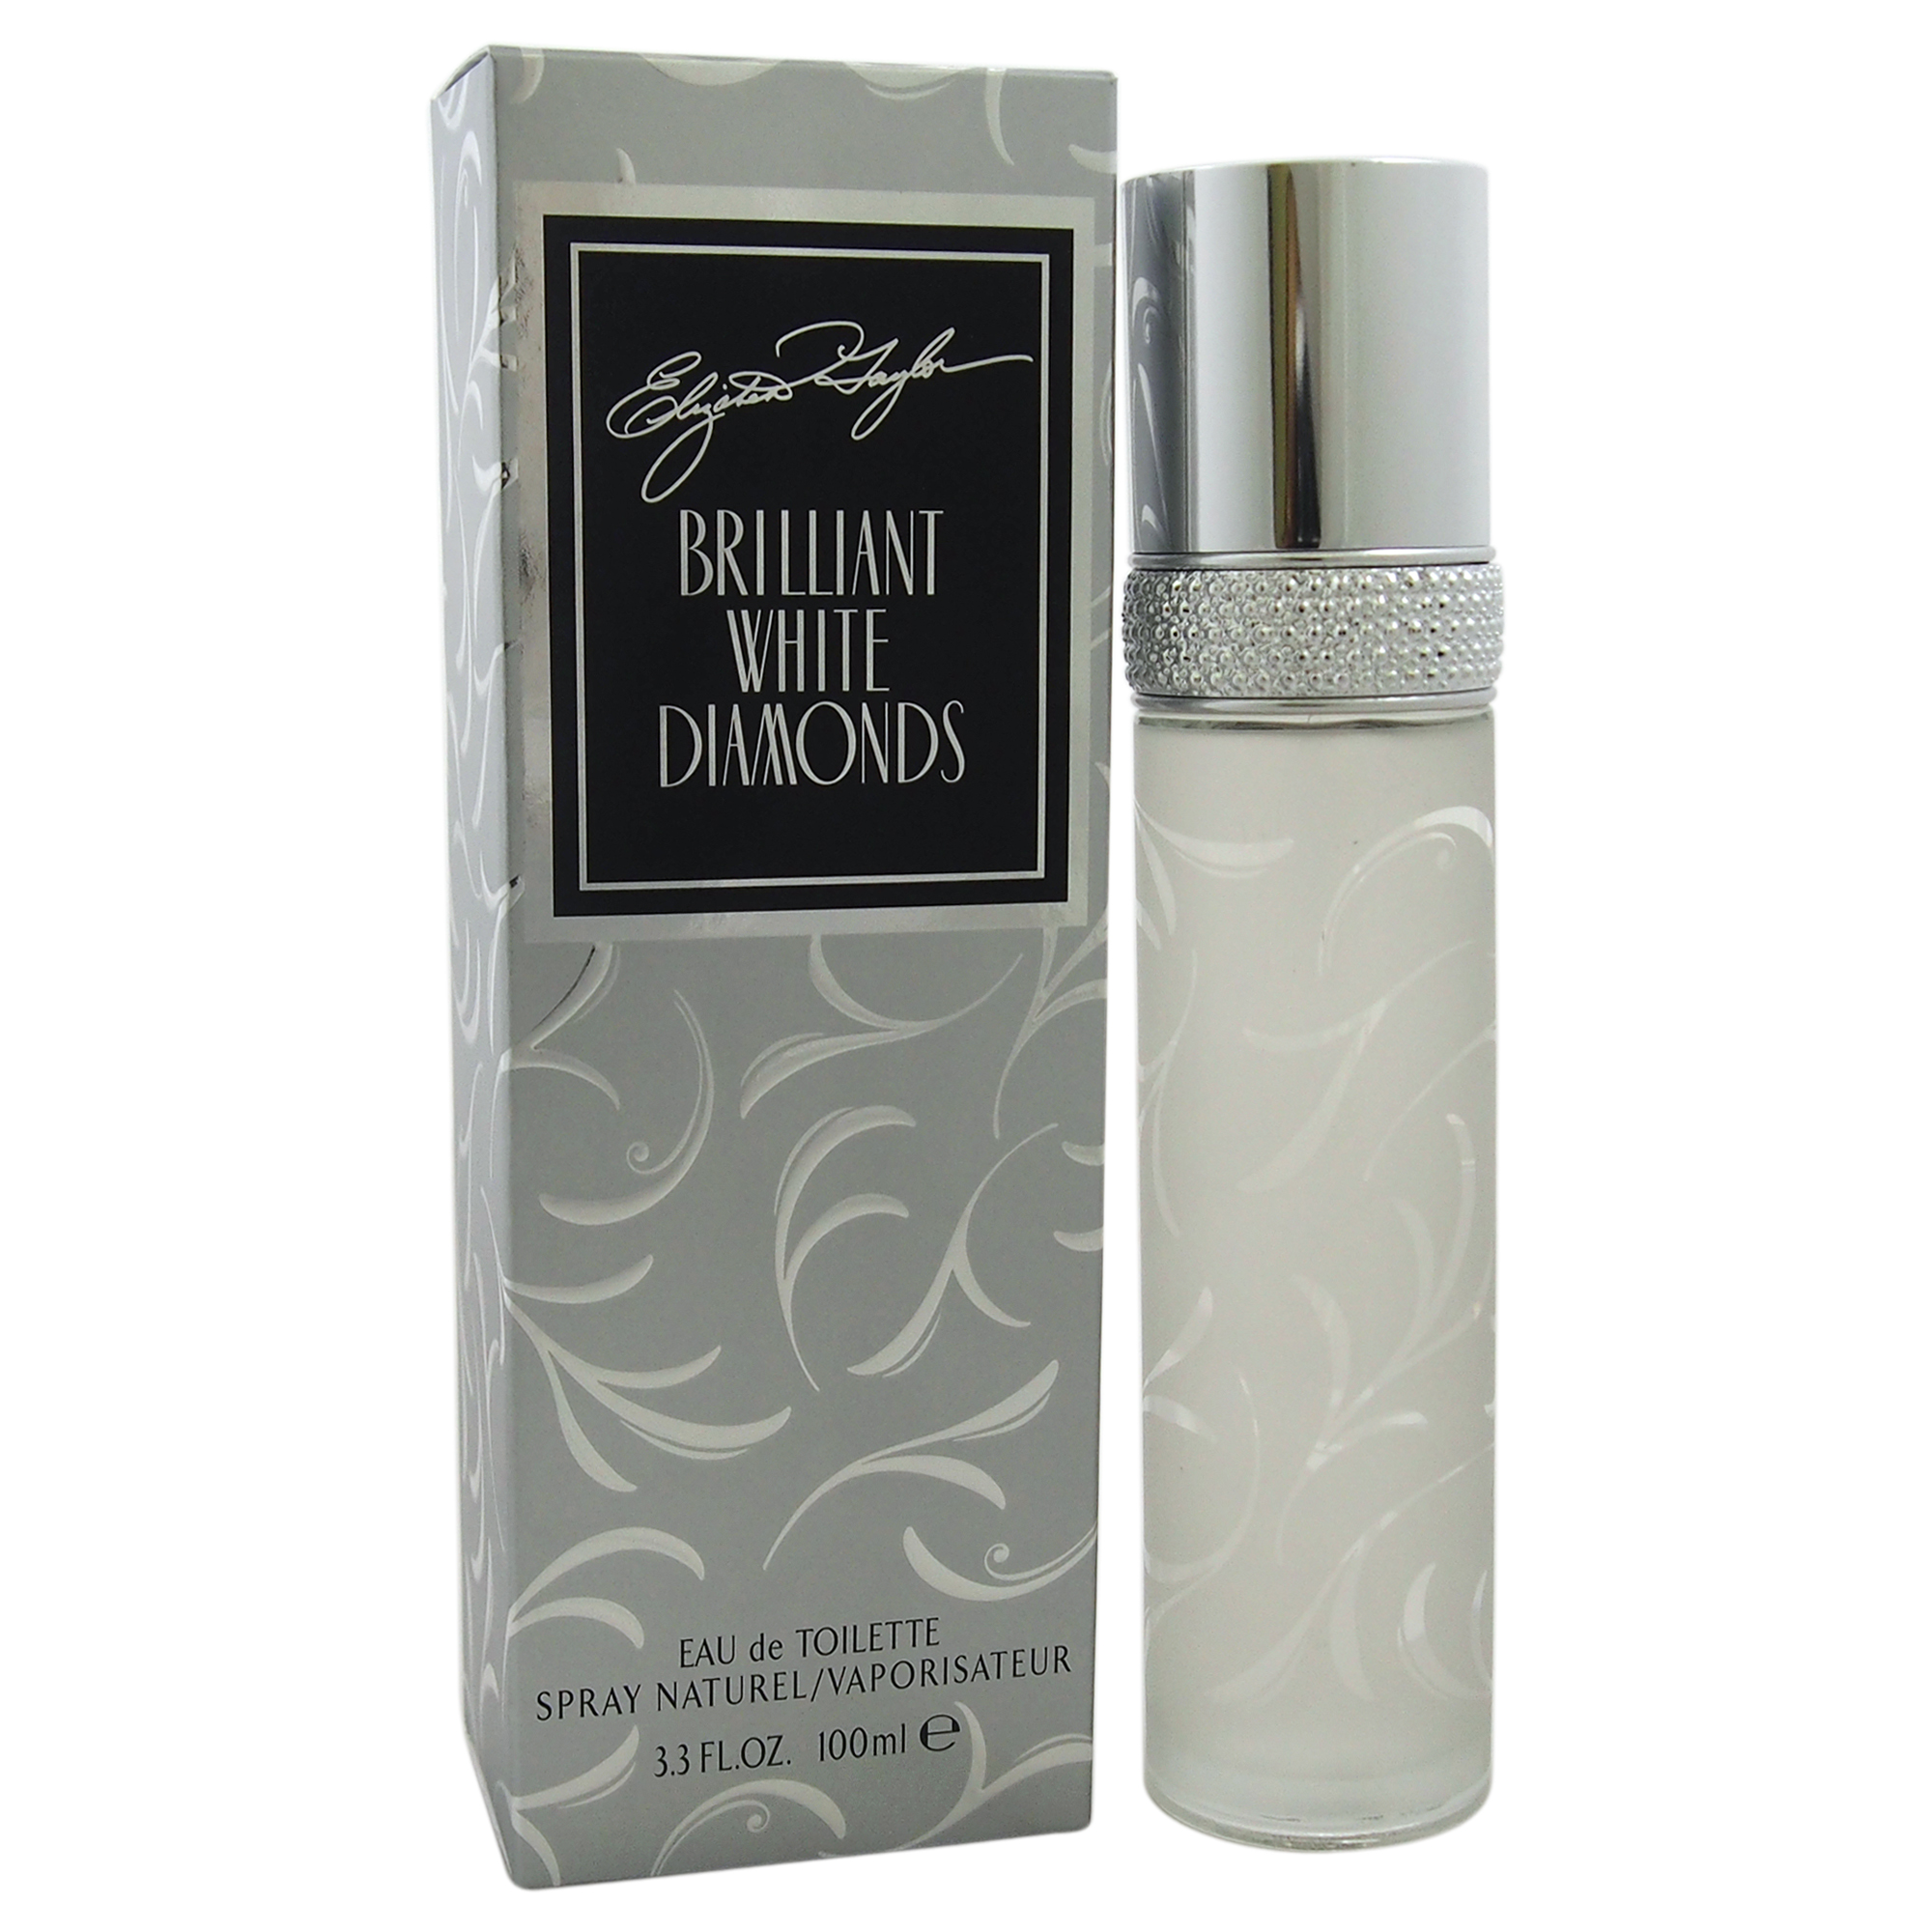 Brilliant White Diamonds by Elizabeth Taylor for Women - 3.3 oz EDT Spray